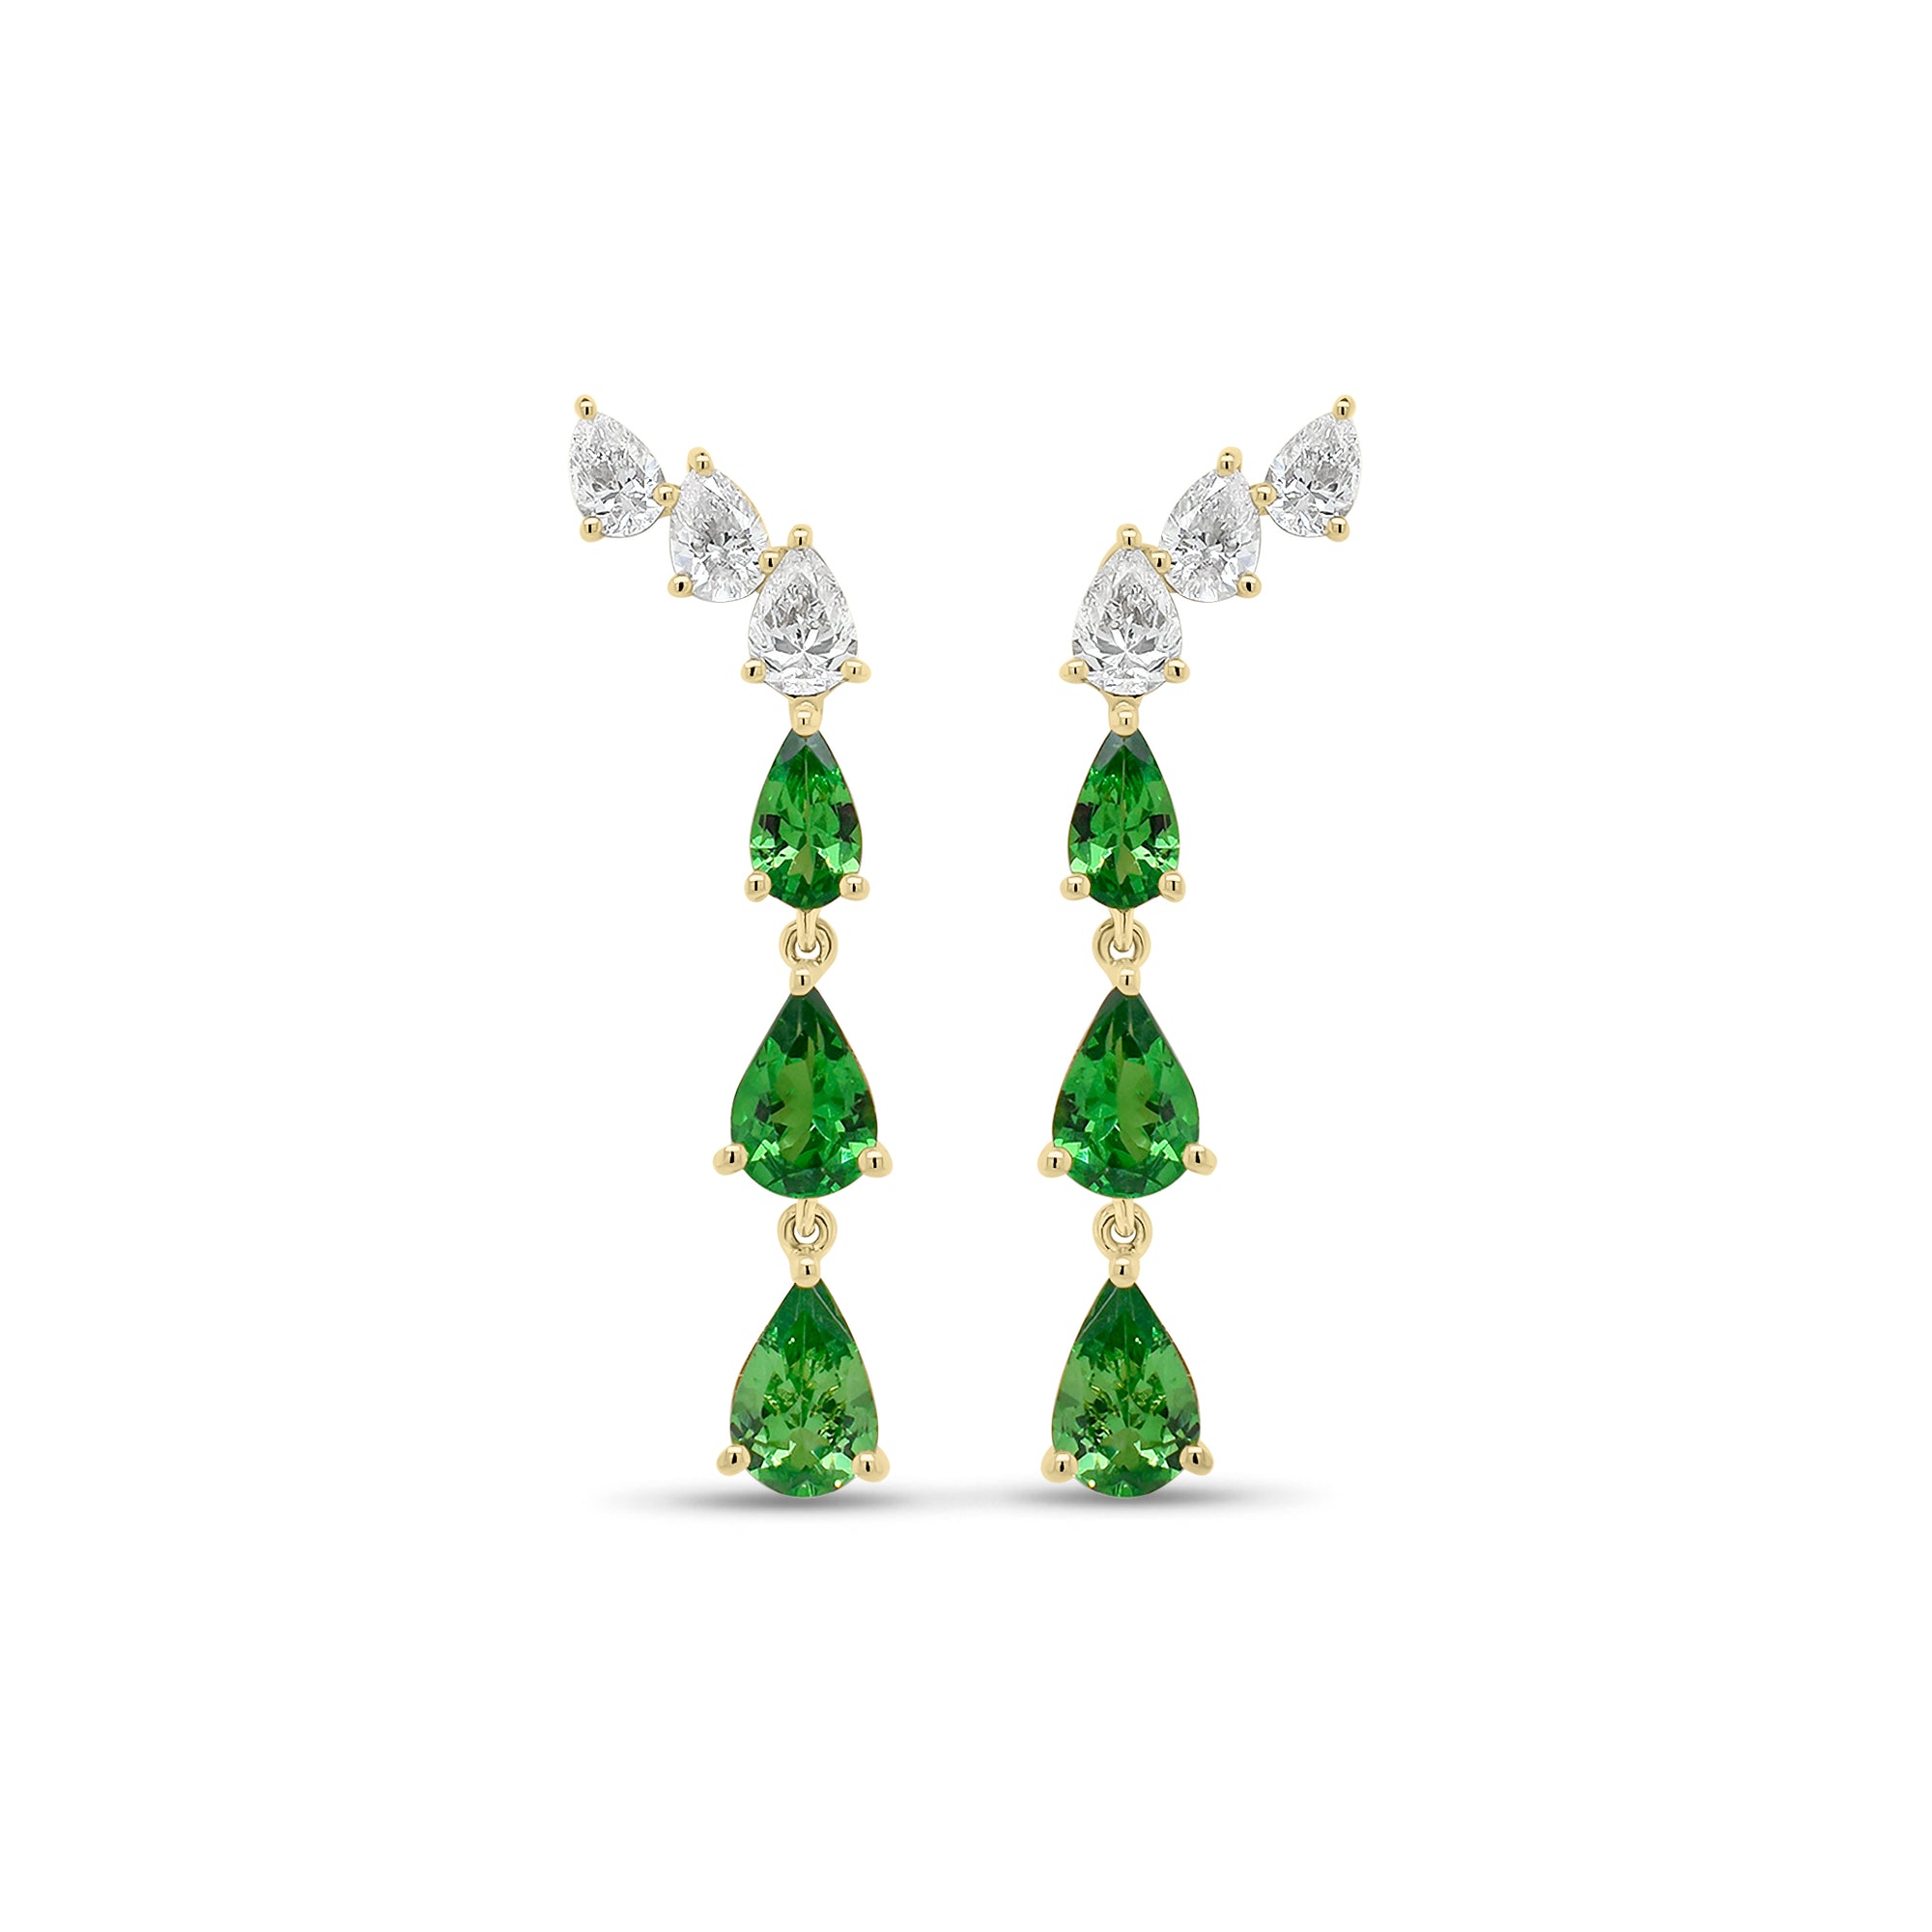 Tsavorite and Diamond Drop Earrings - 14K gold weighing 2.22 grams  - 6 pear-shaped tsavorites weighing 1.36 carats  - 6 pear-shaped diamonds weighing 0.64 carats